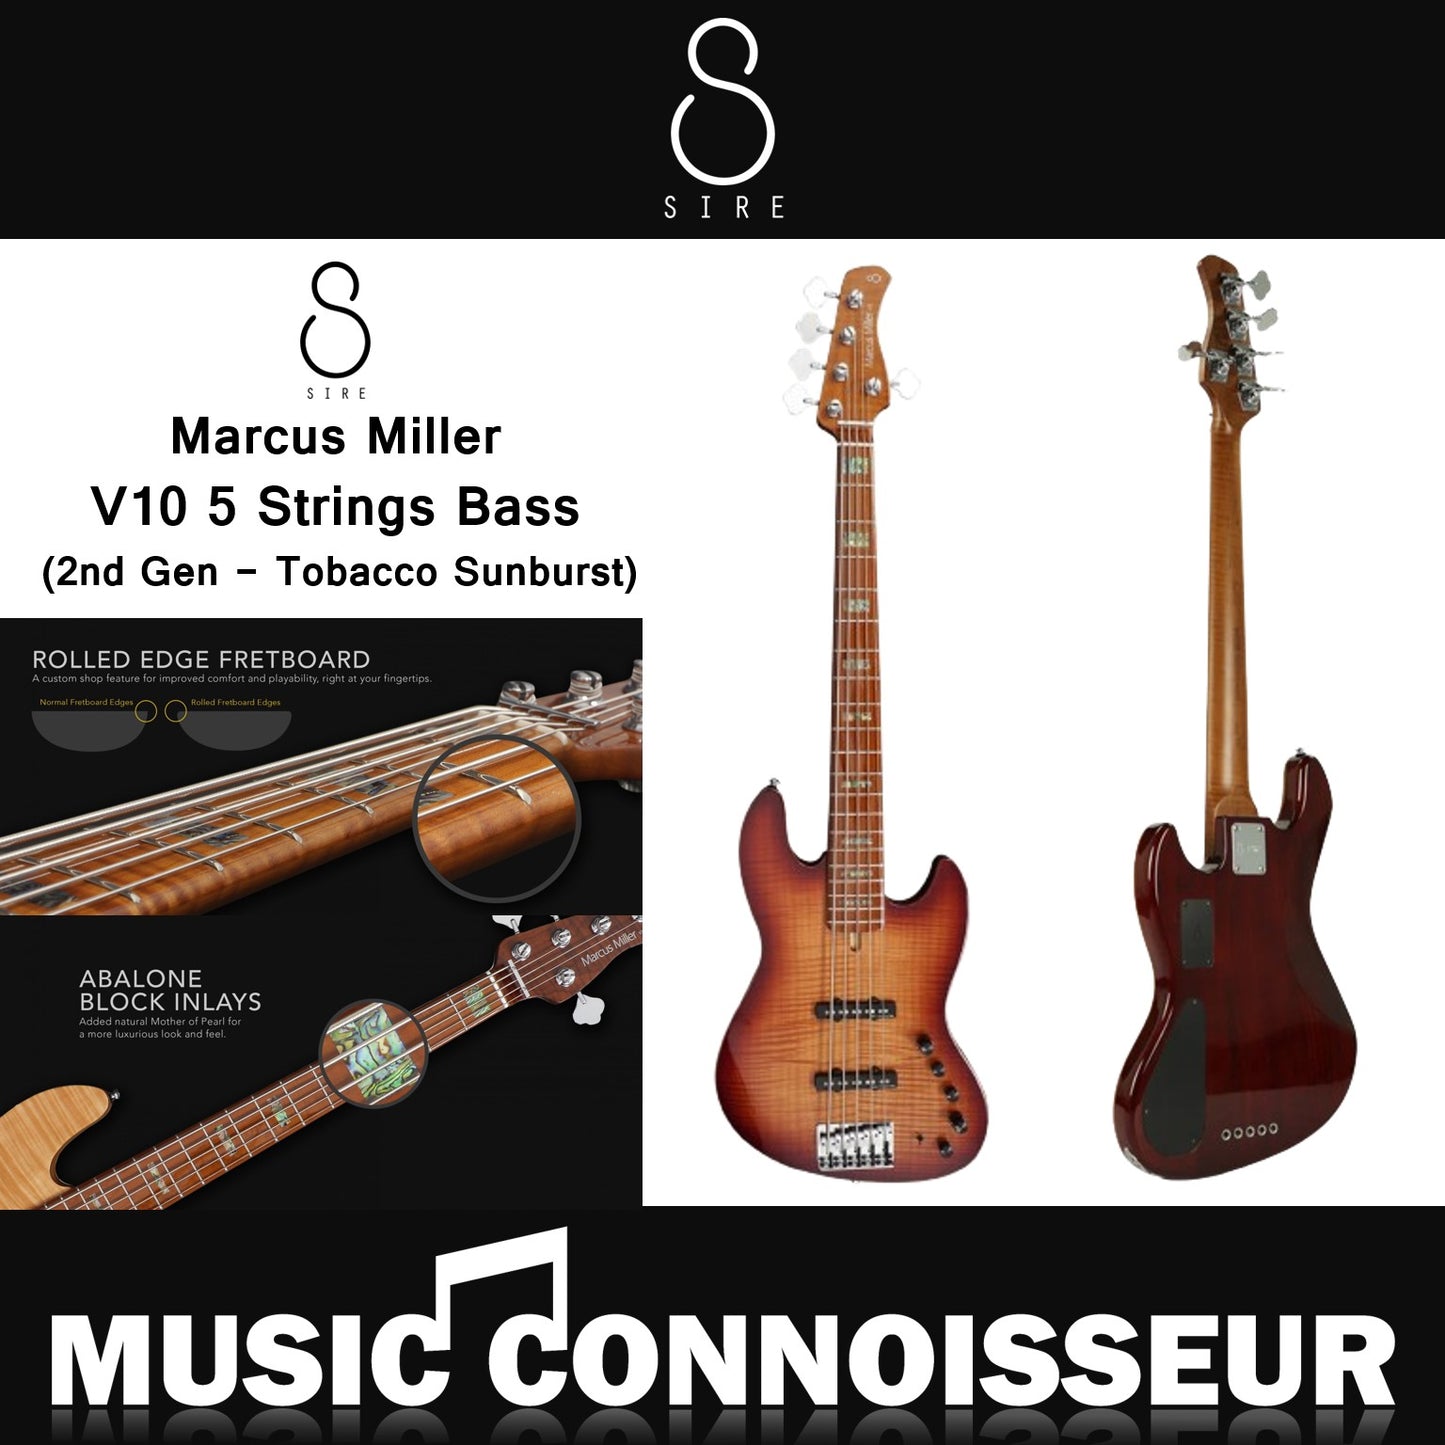 Sire Marcus Miller V10 5 Strings Bass (2nd Gen - Tobacco Sunburst)